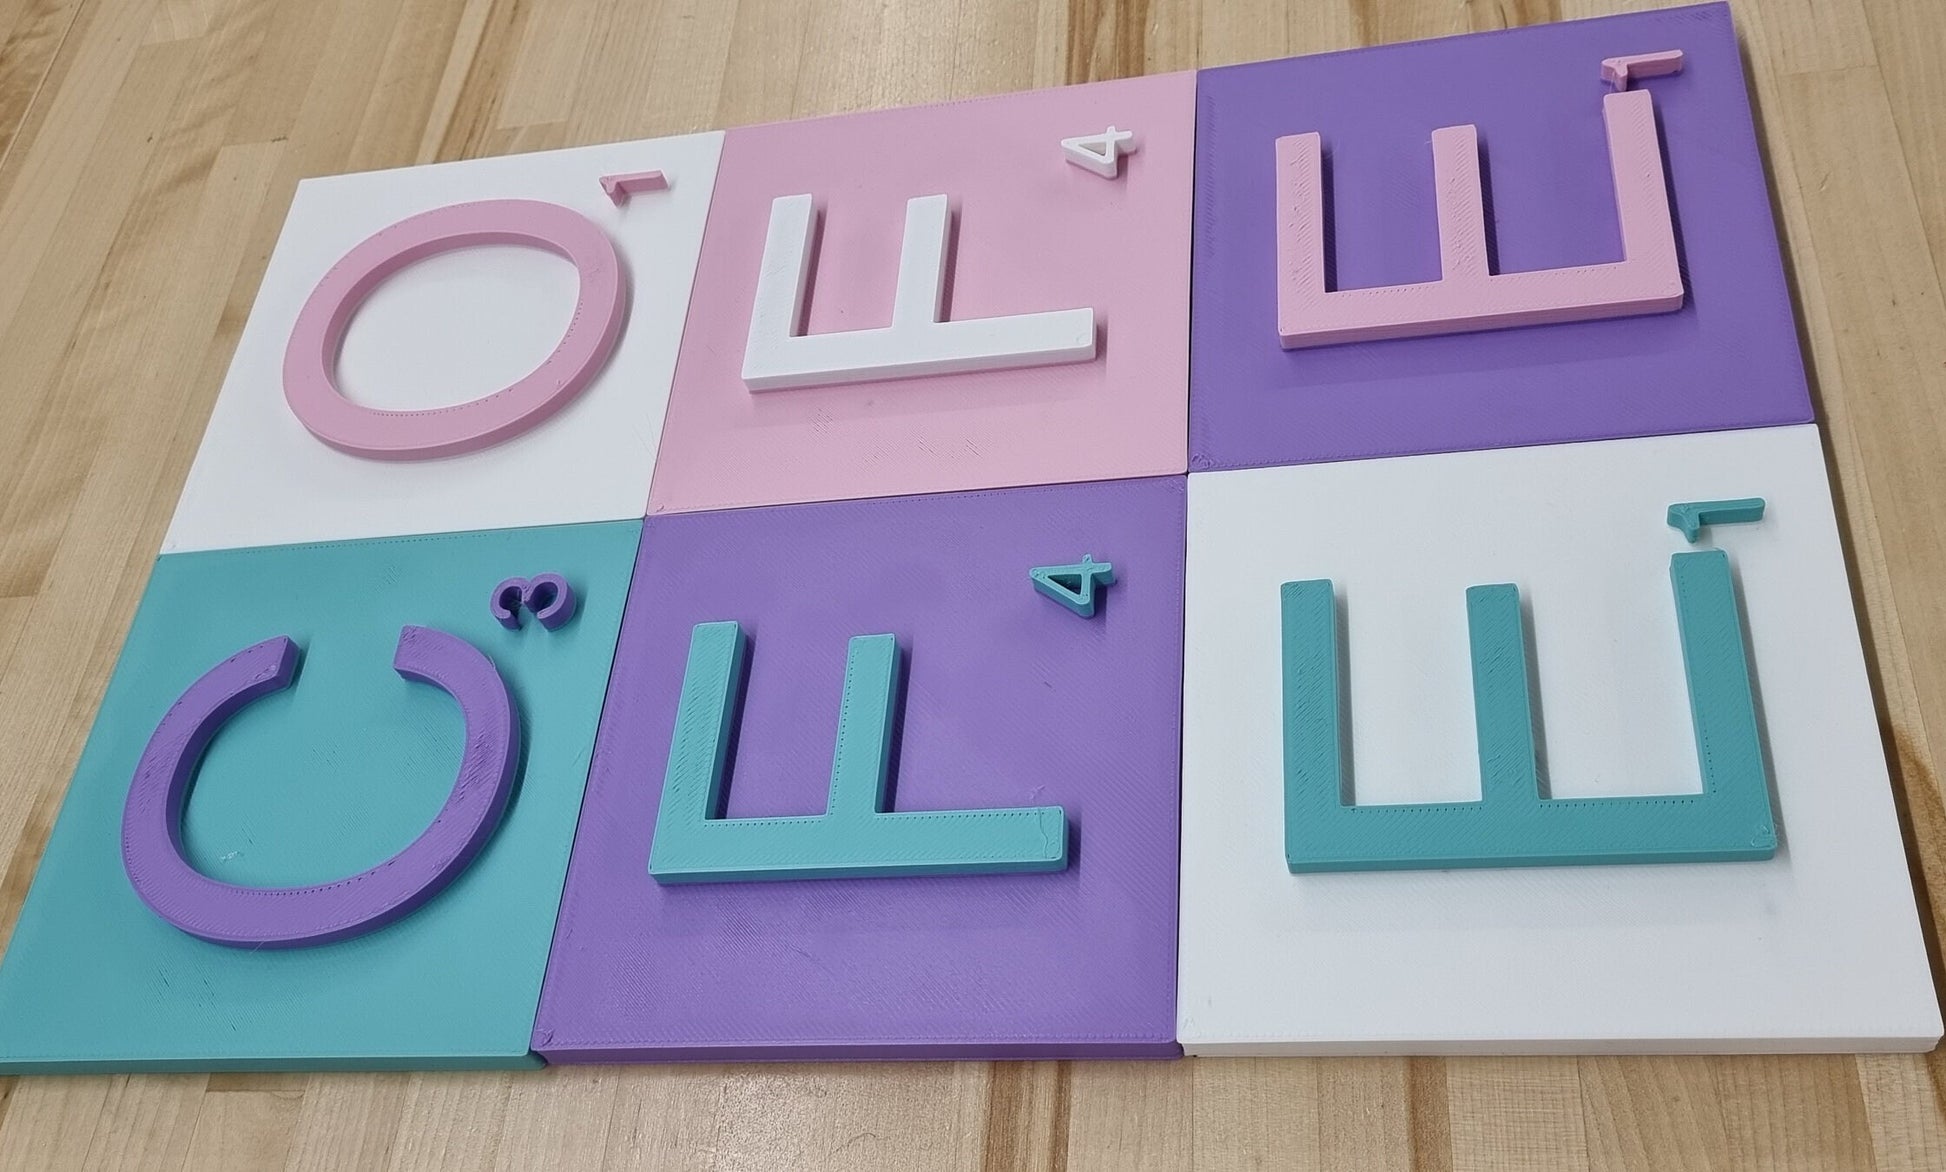 3D Effect Board Game Sign Letter Tiles - 6 Inch. Modern Look 3D Effect Sign Letter Tiles In Tons Of Colors!